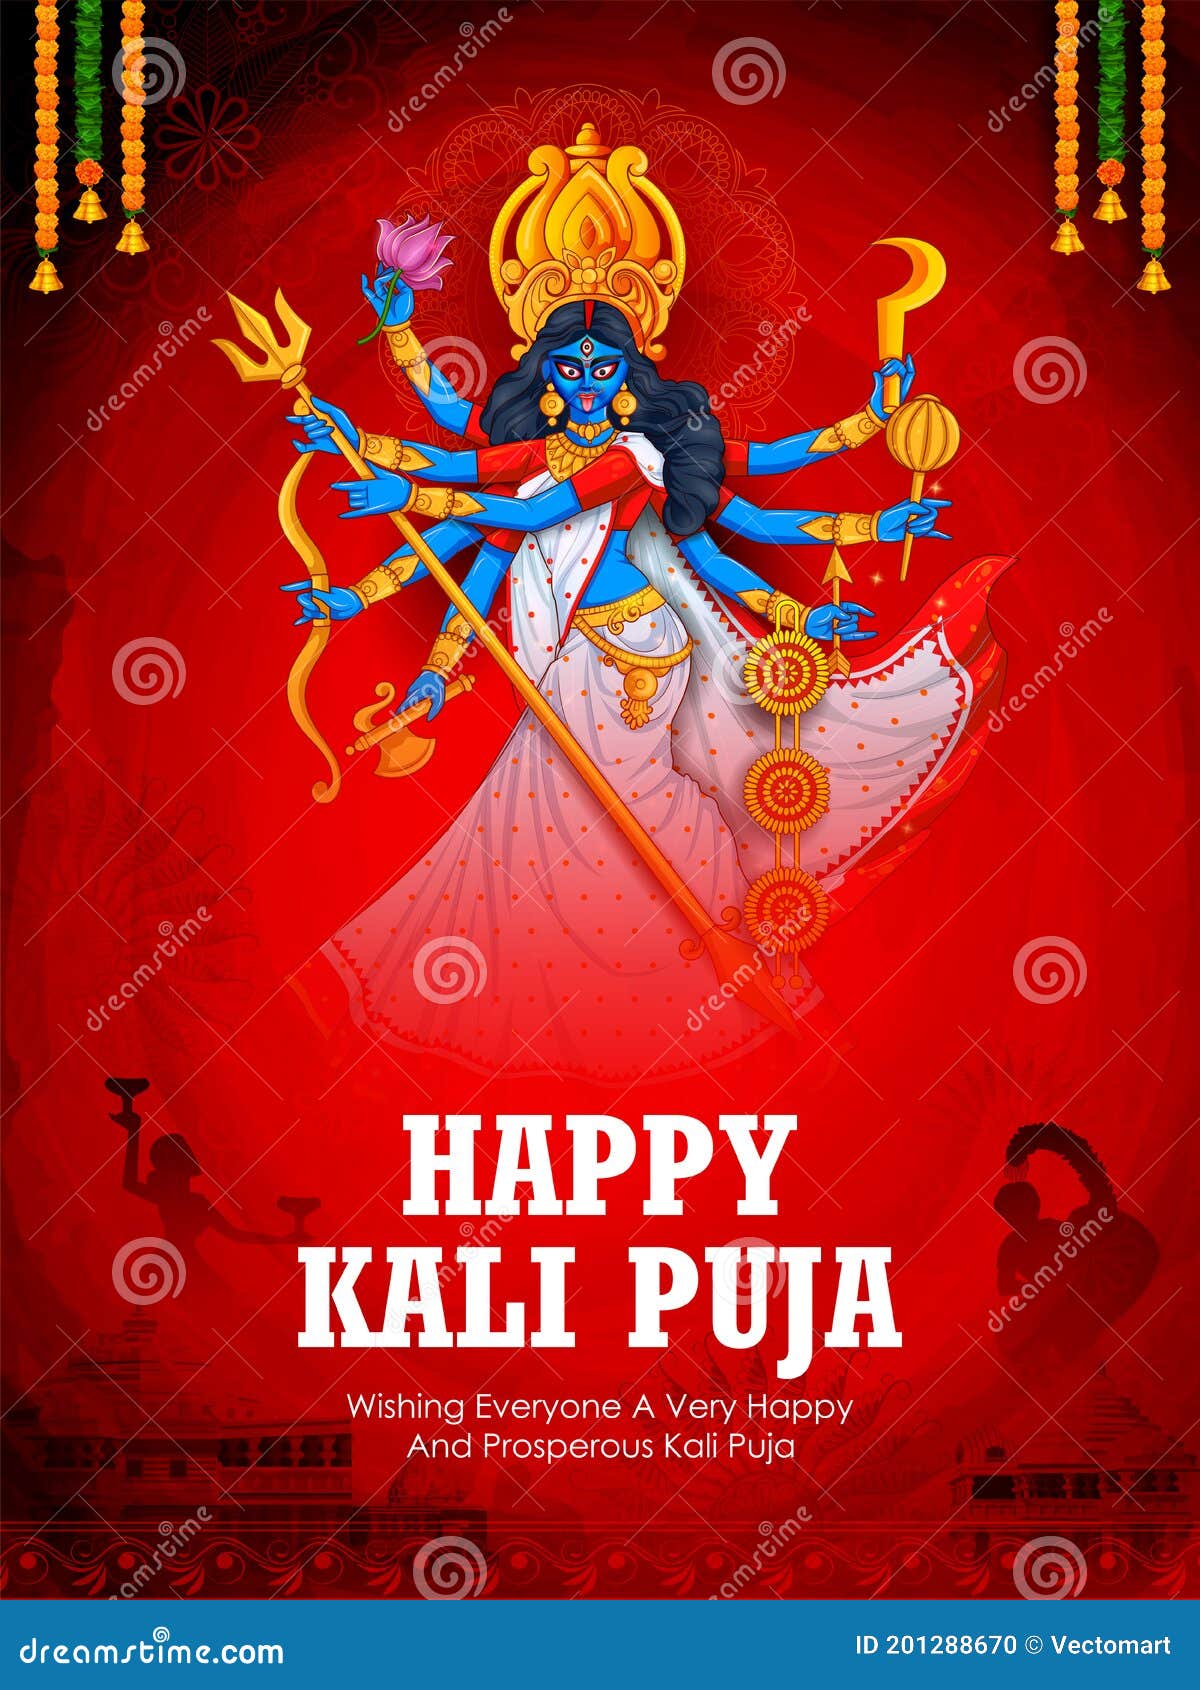 goddess kali maa on diwali kali pooja background of india festival